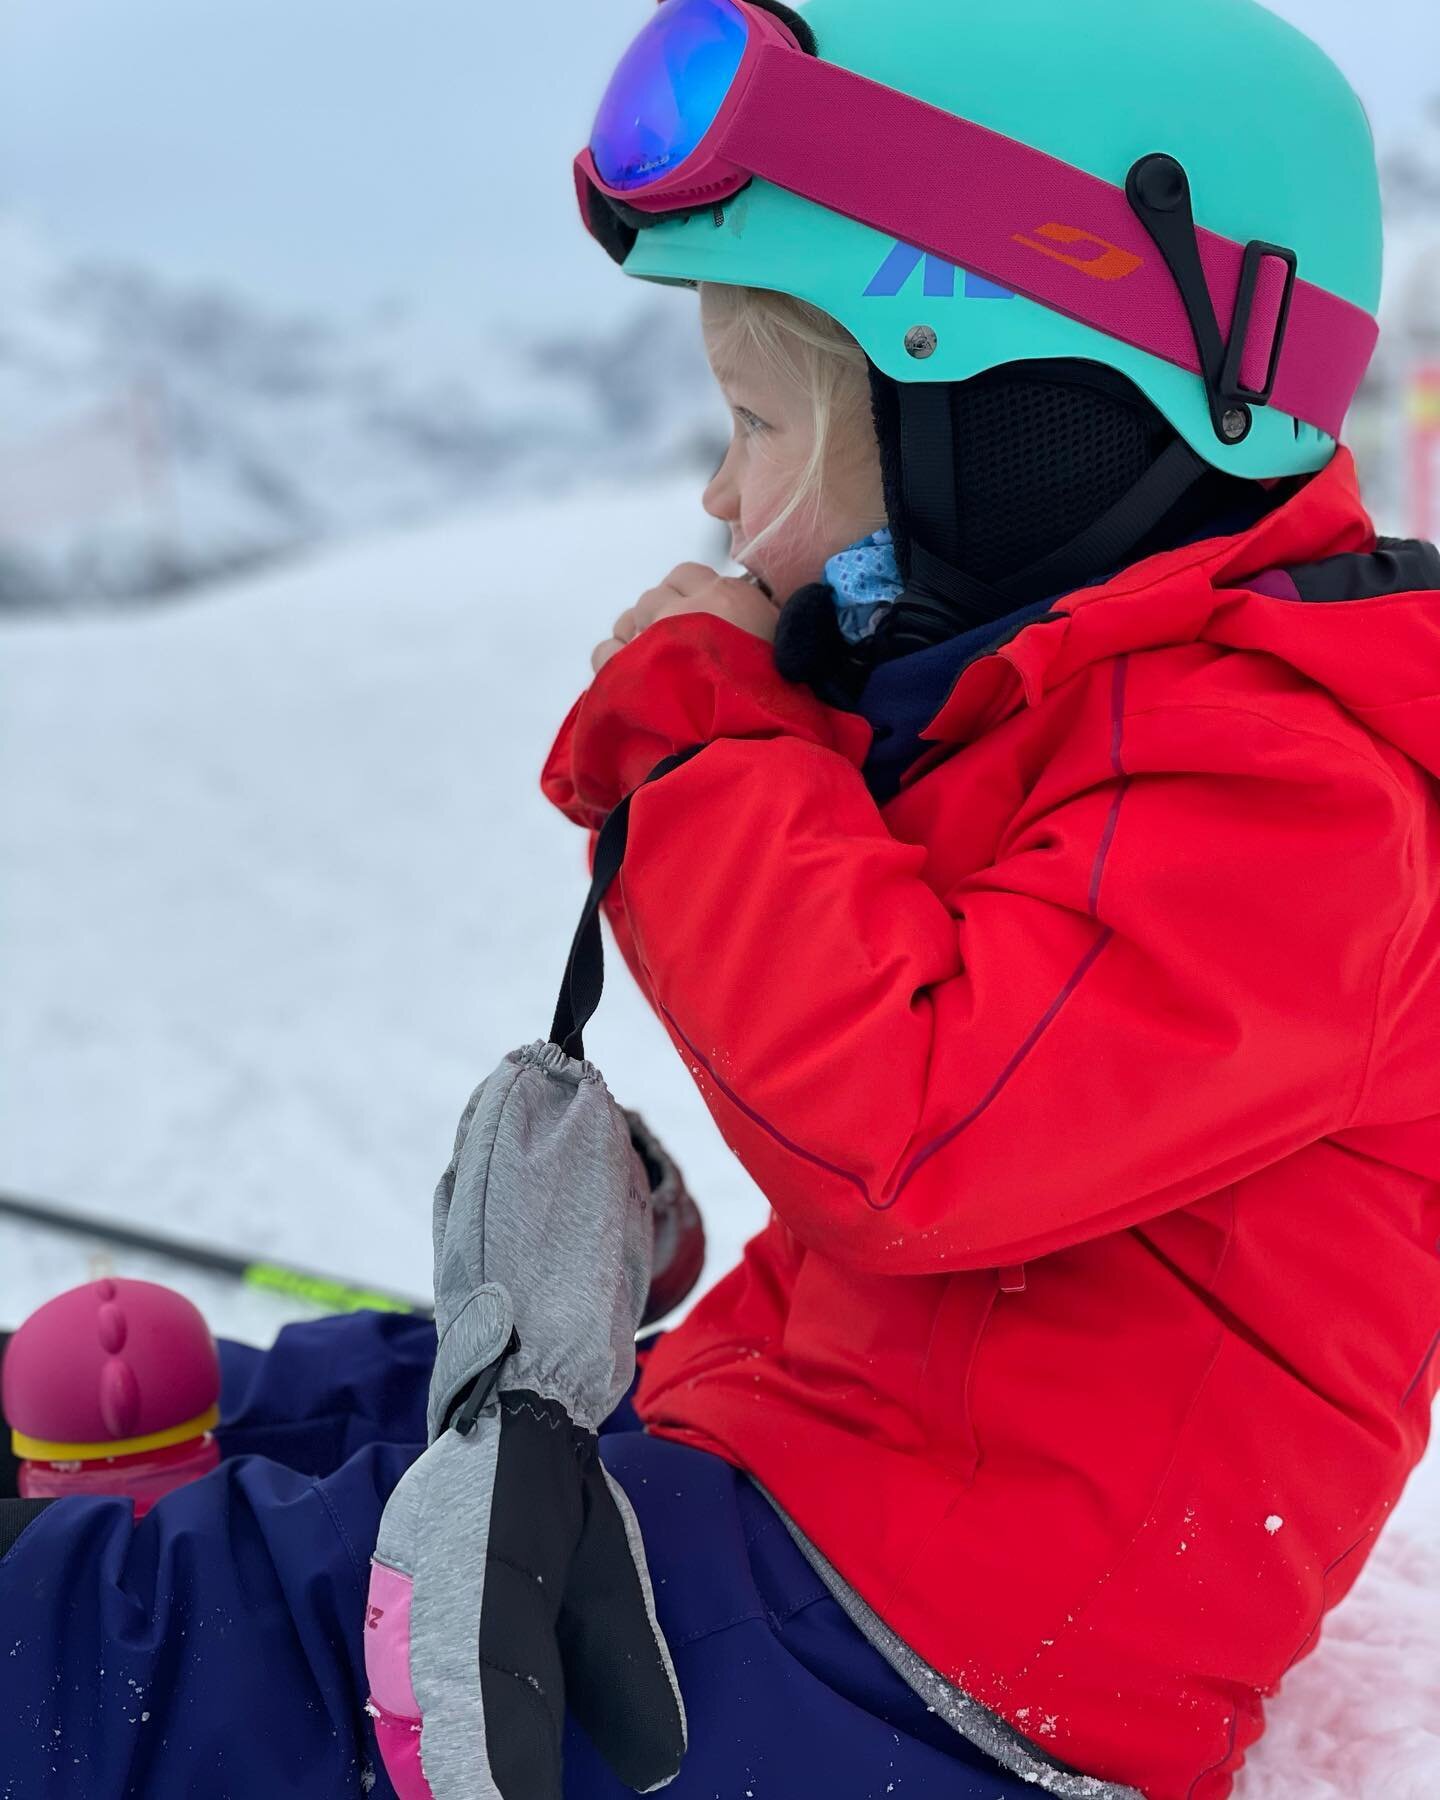 What is skiing without snacks? 🍫 
.
.
.
.
.
#ski #skischool #skiing #skifast #skiinstructor #skiinstructorlife #skiingday #skiingislife #skiingfun #snow #snowy #winter #winterwonderland #winterfun #winterholiday #zermatt #switzerland #camp #skiskisk